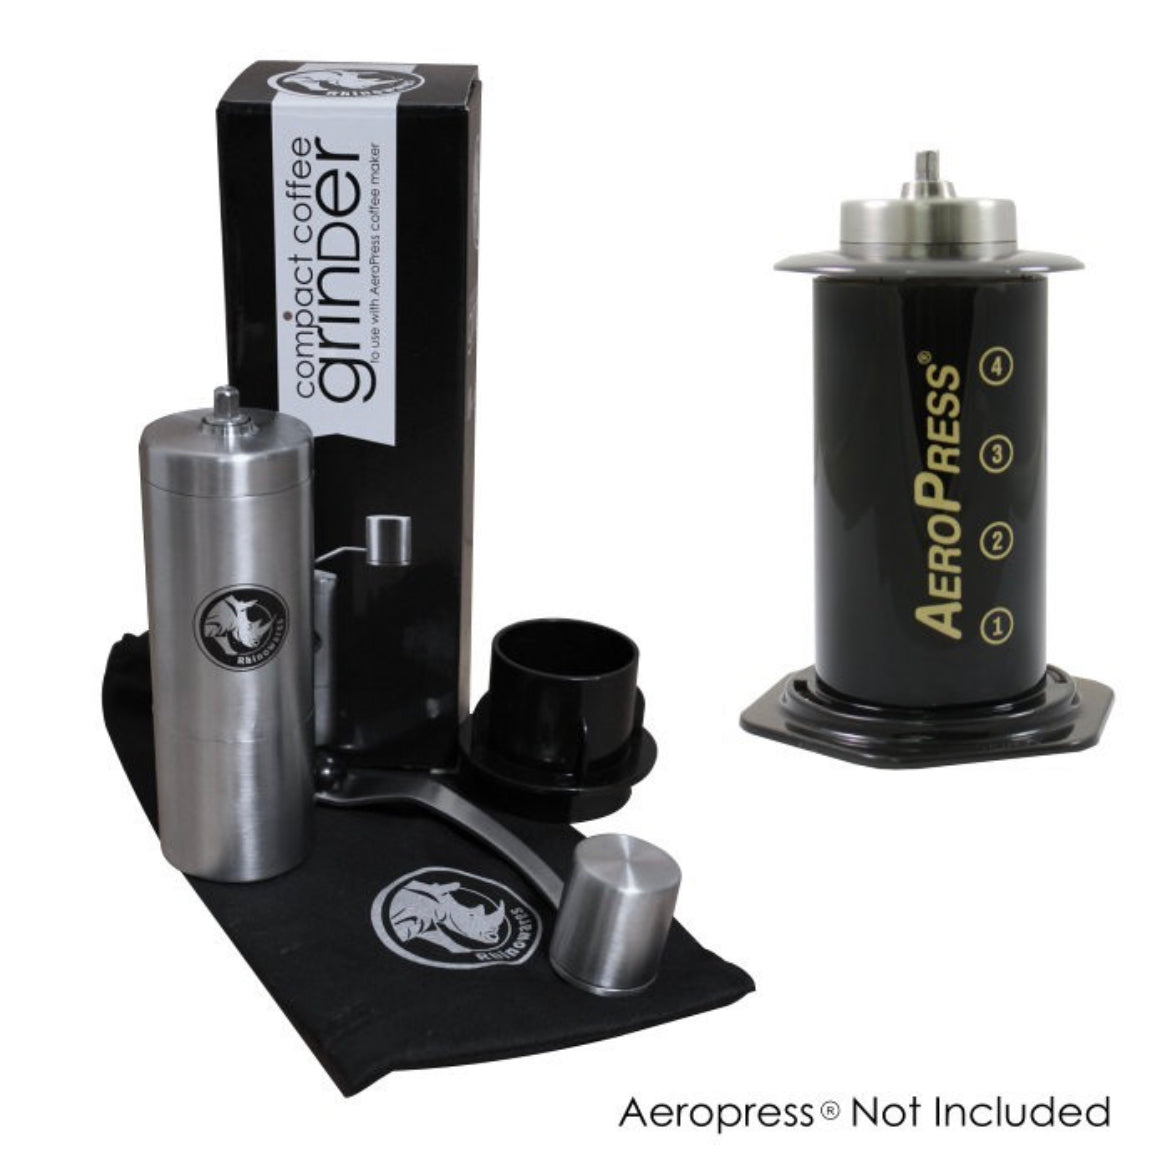 Rhino Handmühle Small mit Adapter für Aeropress - Coffee Coaching Club